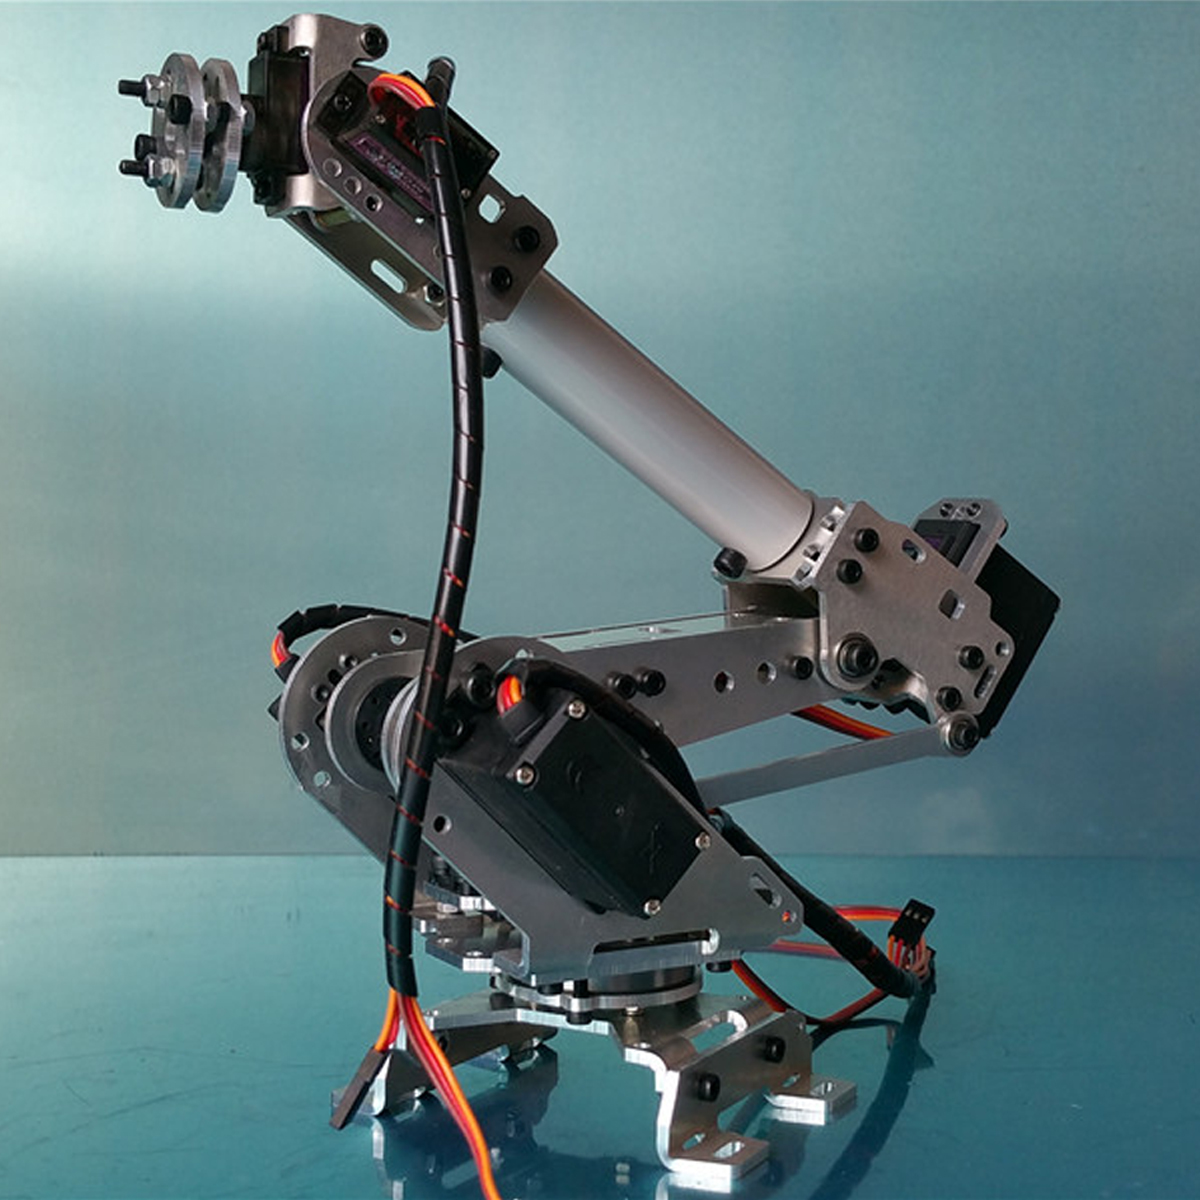 6DOF Mechanical Robot Arm Claw With Servos For Robotics Arduino DIY Kit 6